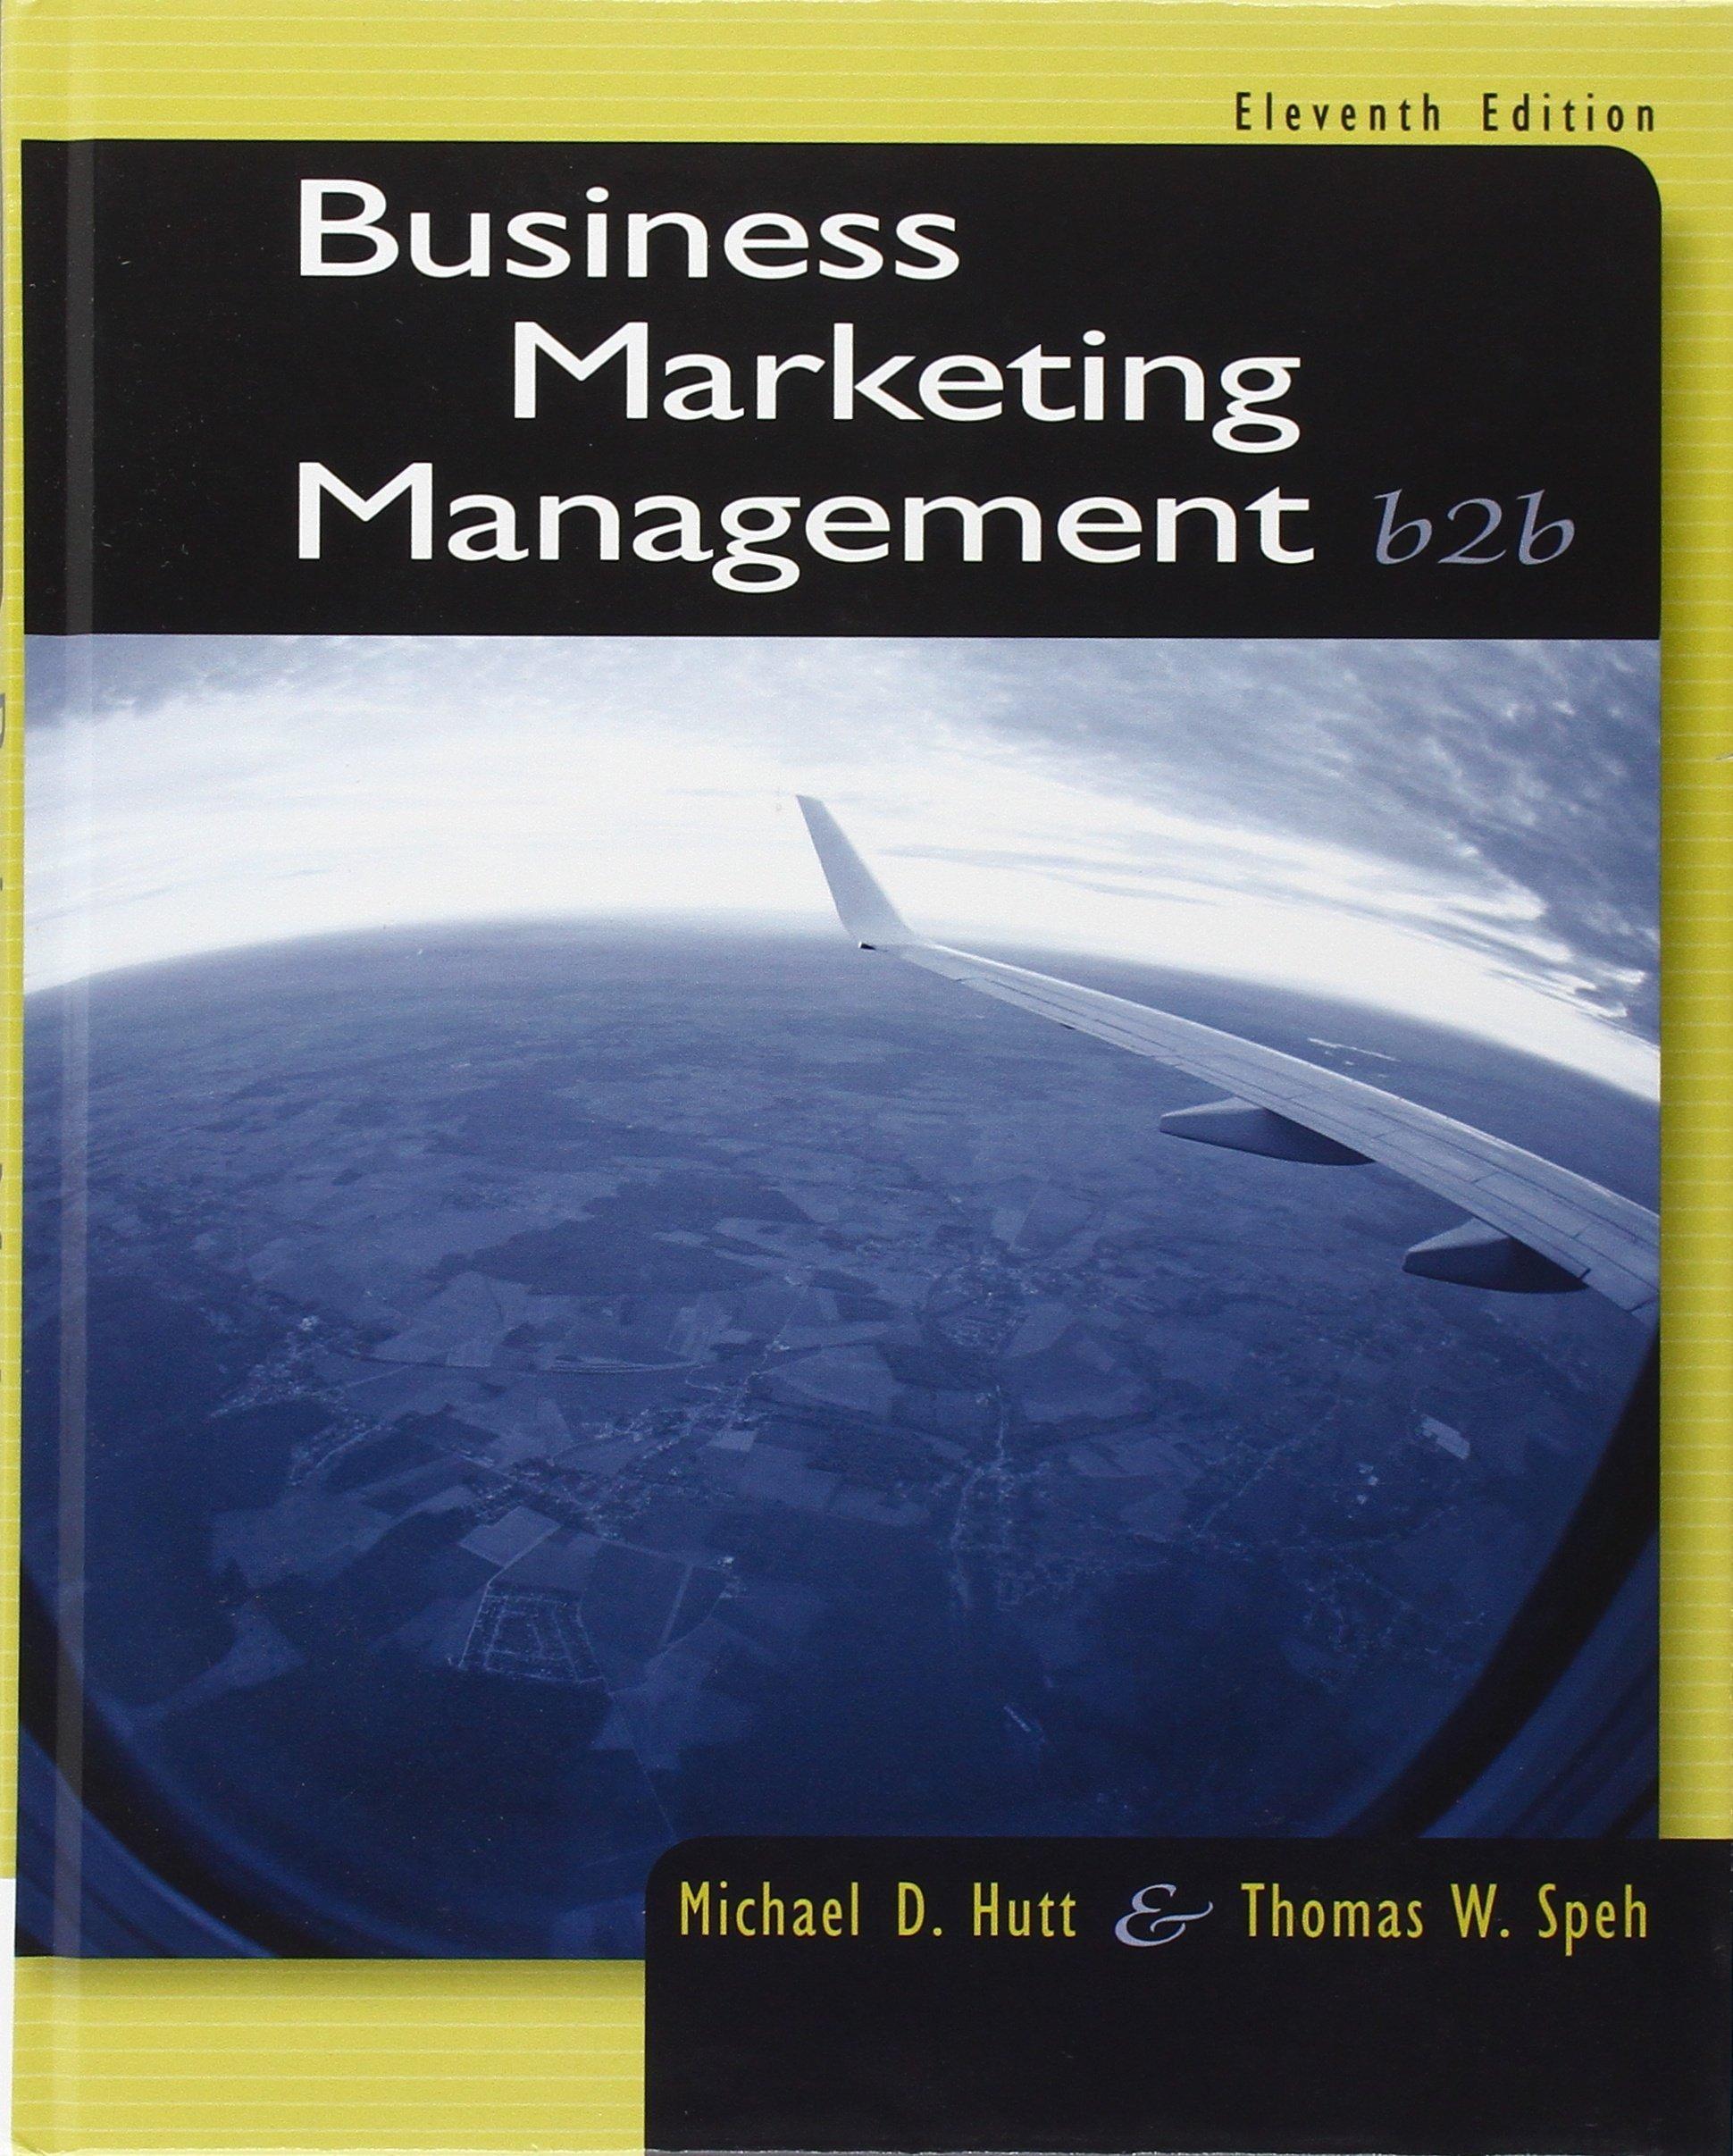 business marketing management b2b 11th edition michael d. hutt, thomas w. speh 1133189563, 9781133189565